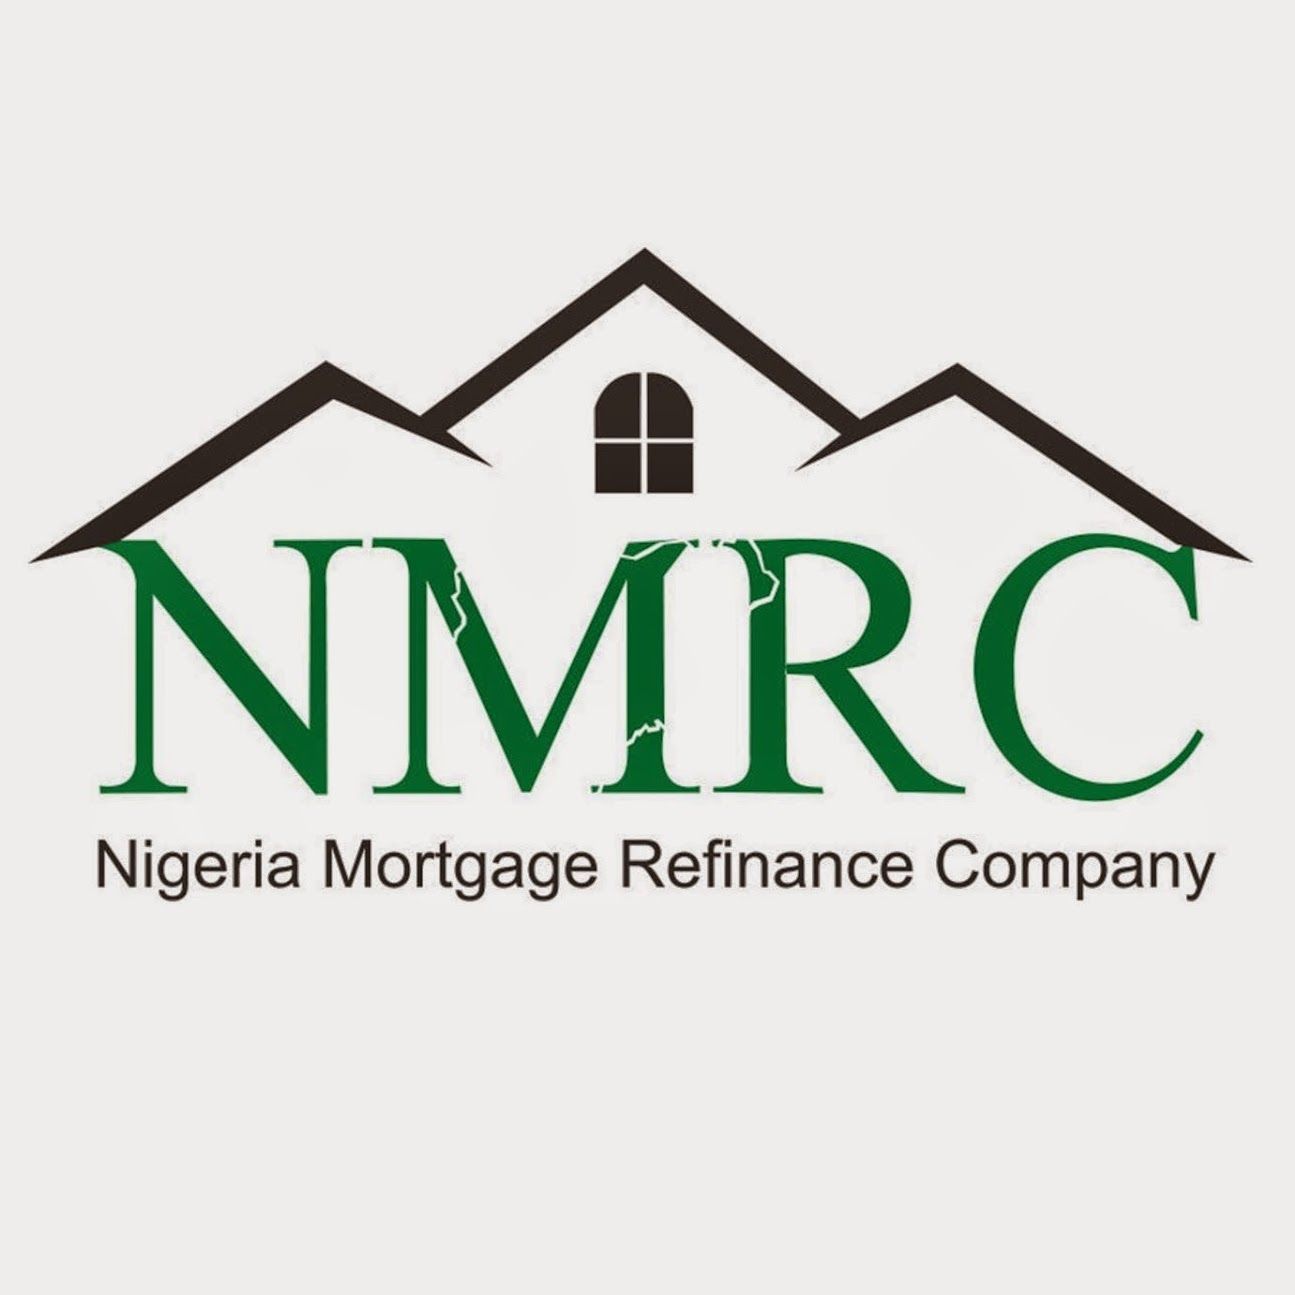 Nigeria Mortgage Refinance Company